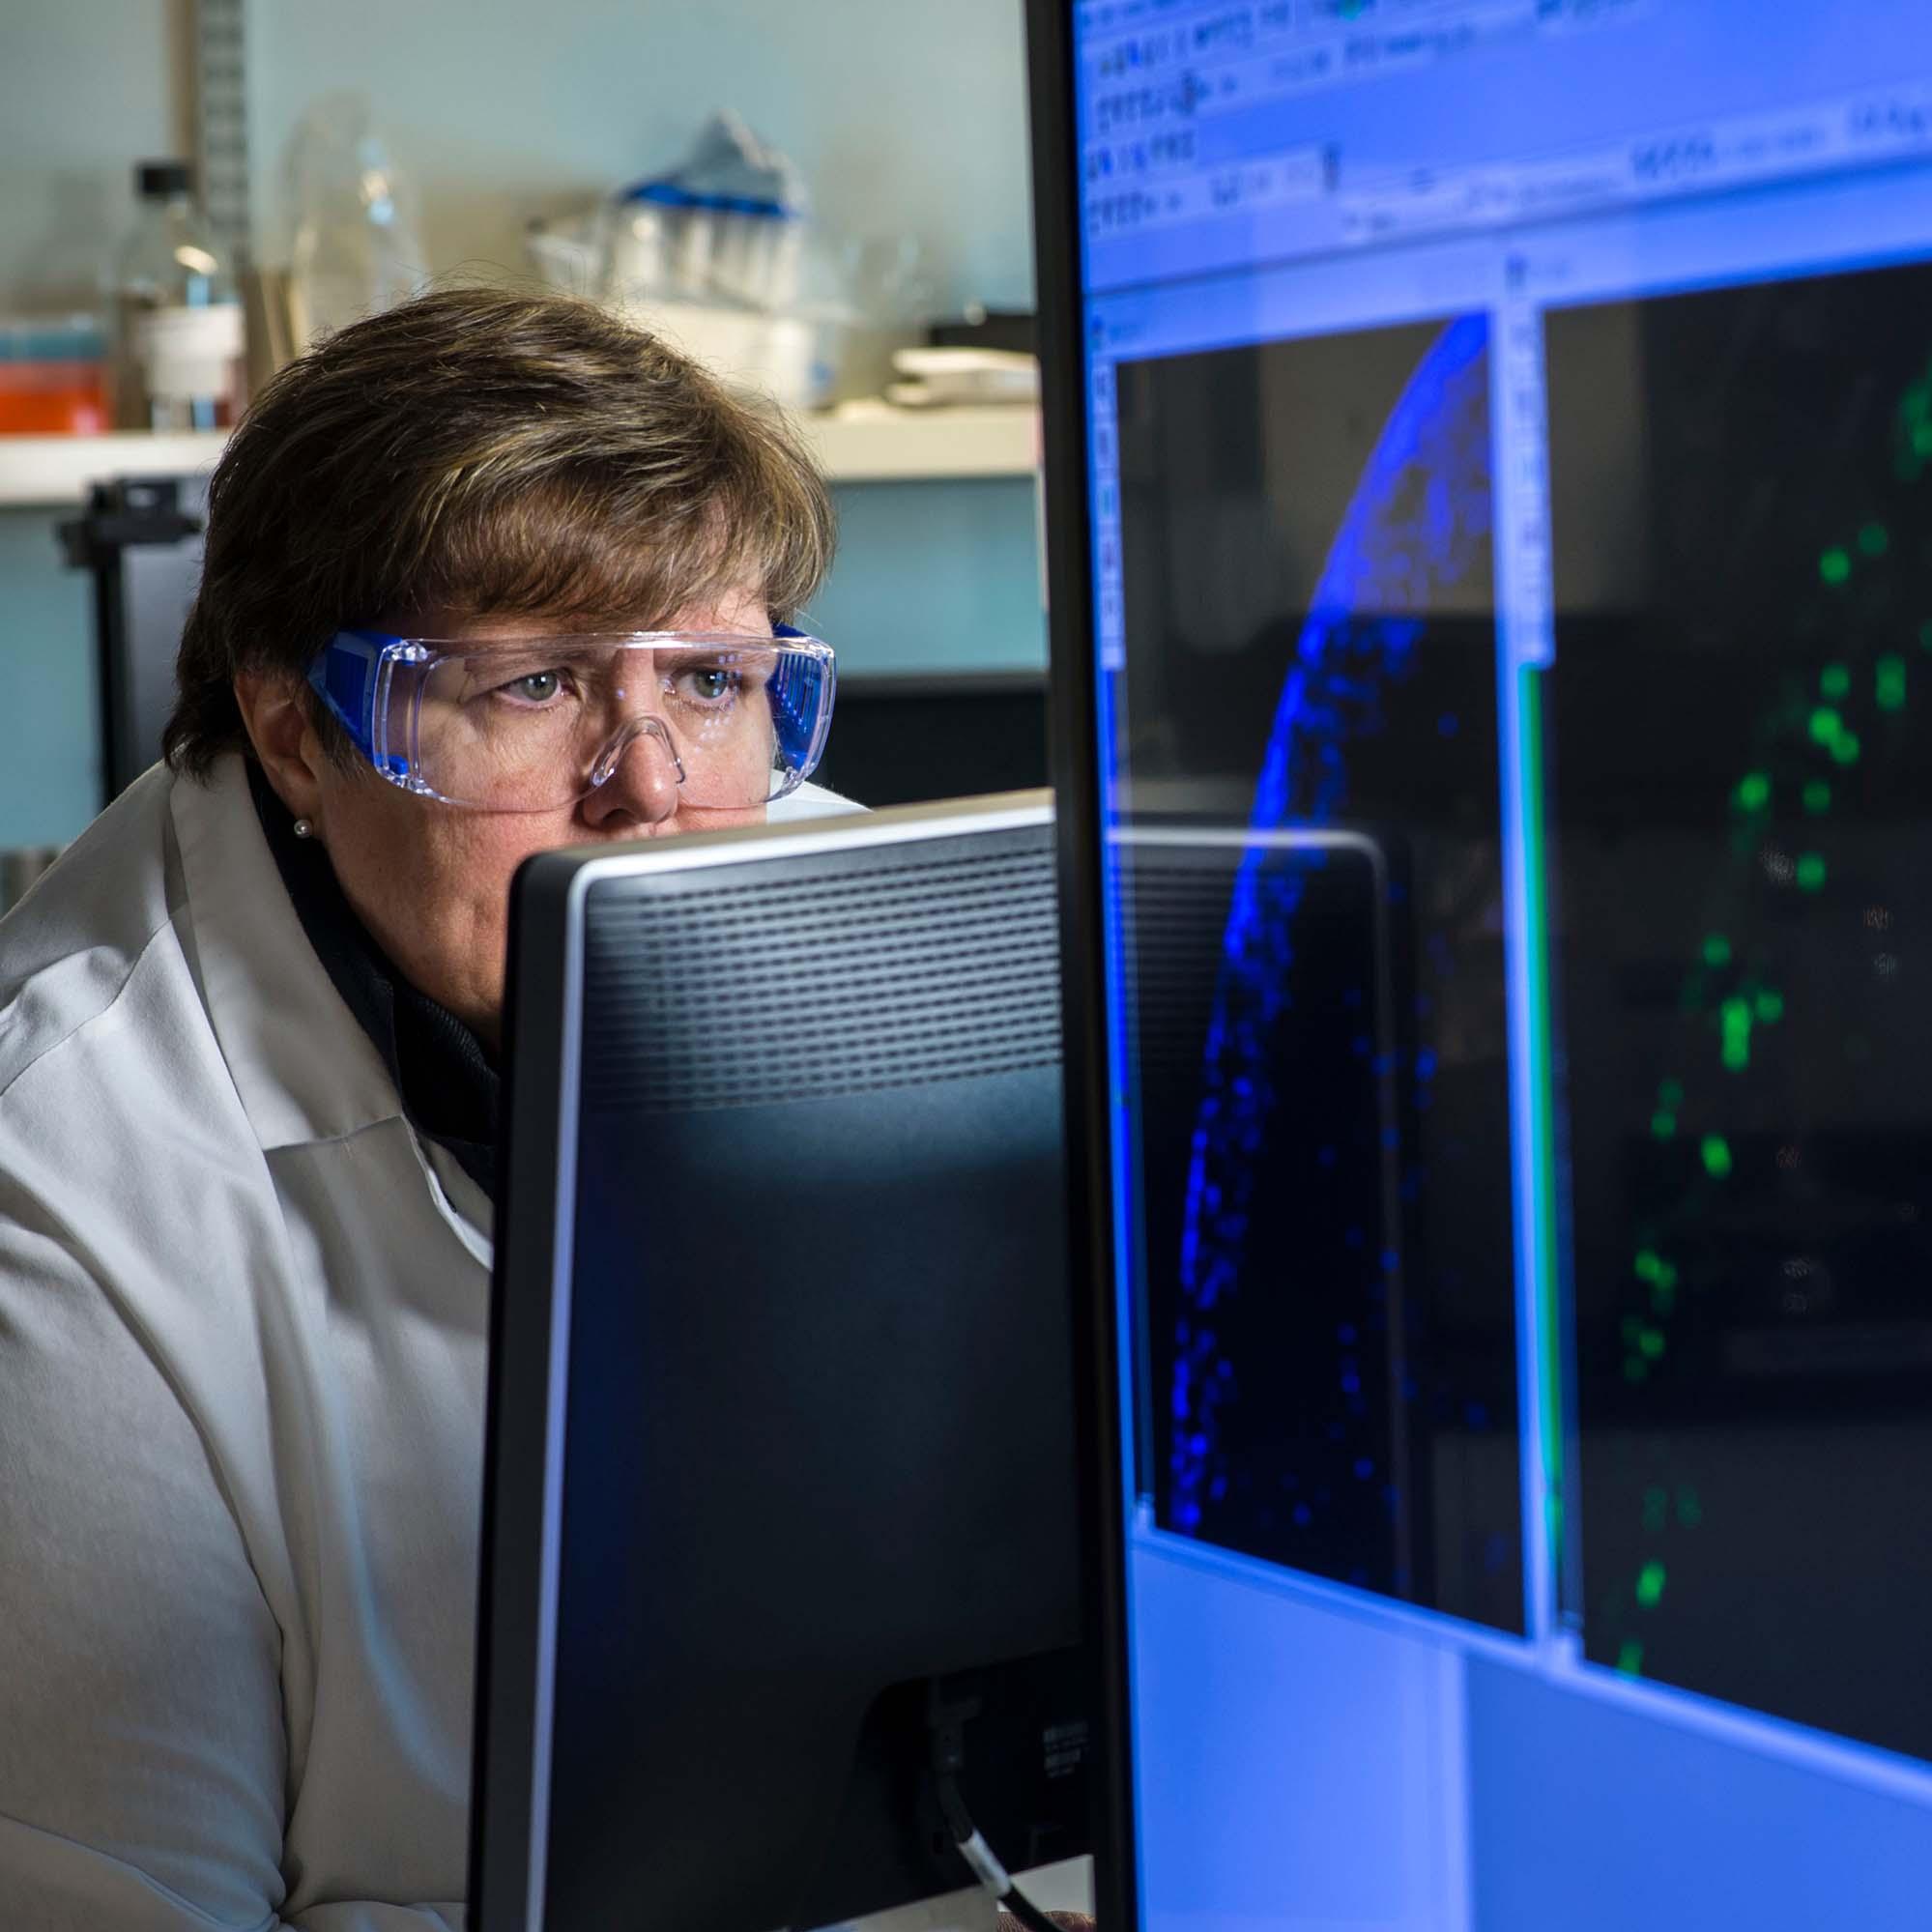 A female Vertex scientist wearing goggles studies a computer monitor